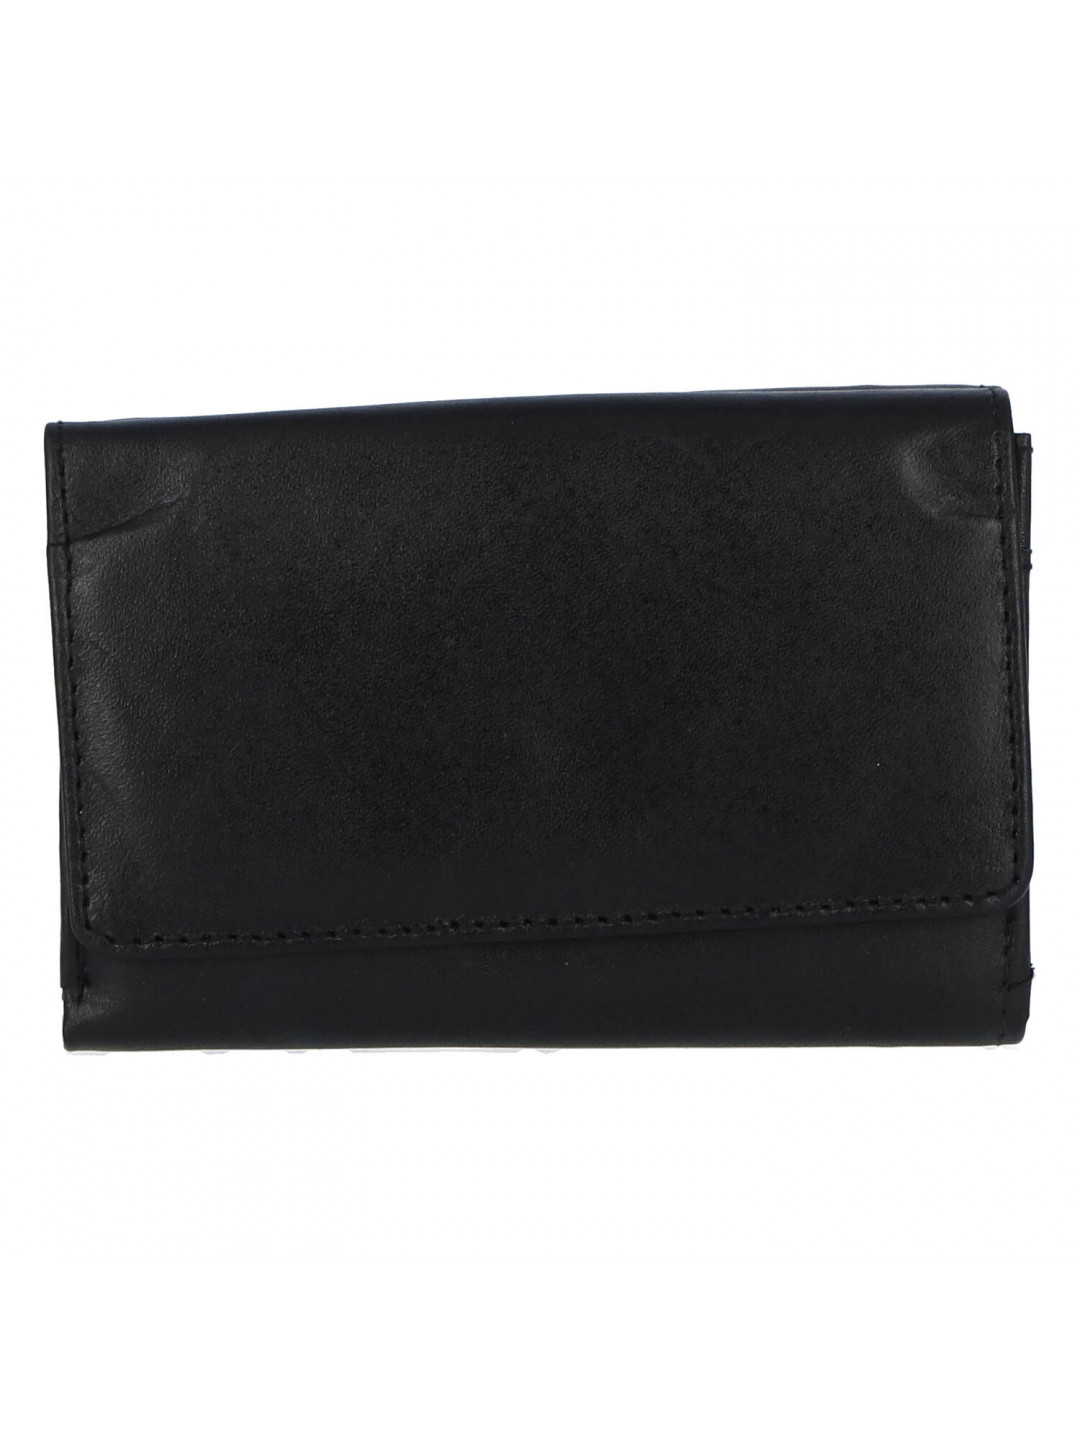 Pěkná a praktická dámská kožená peněženka Emílie černá